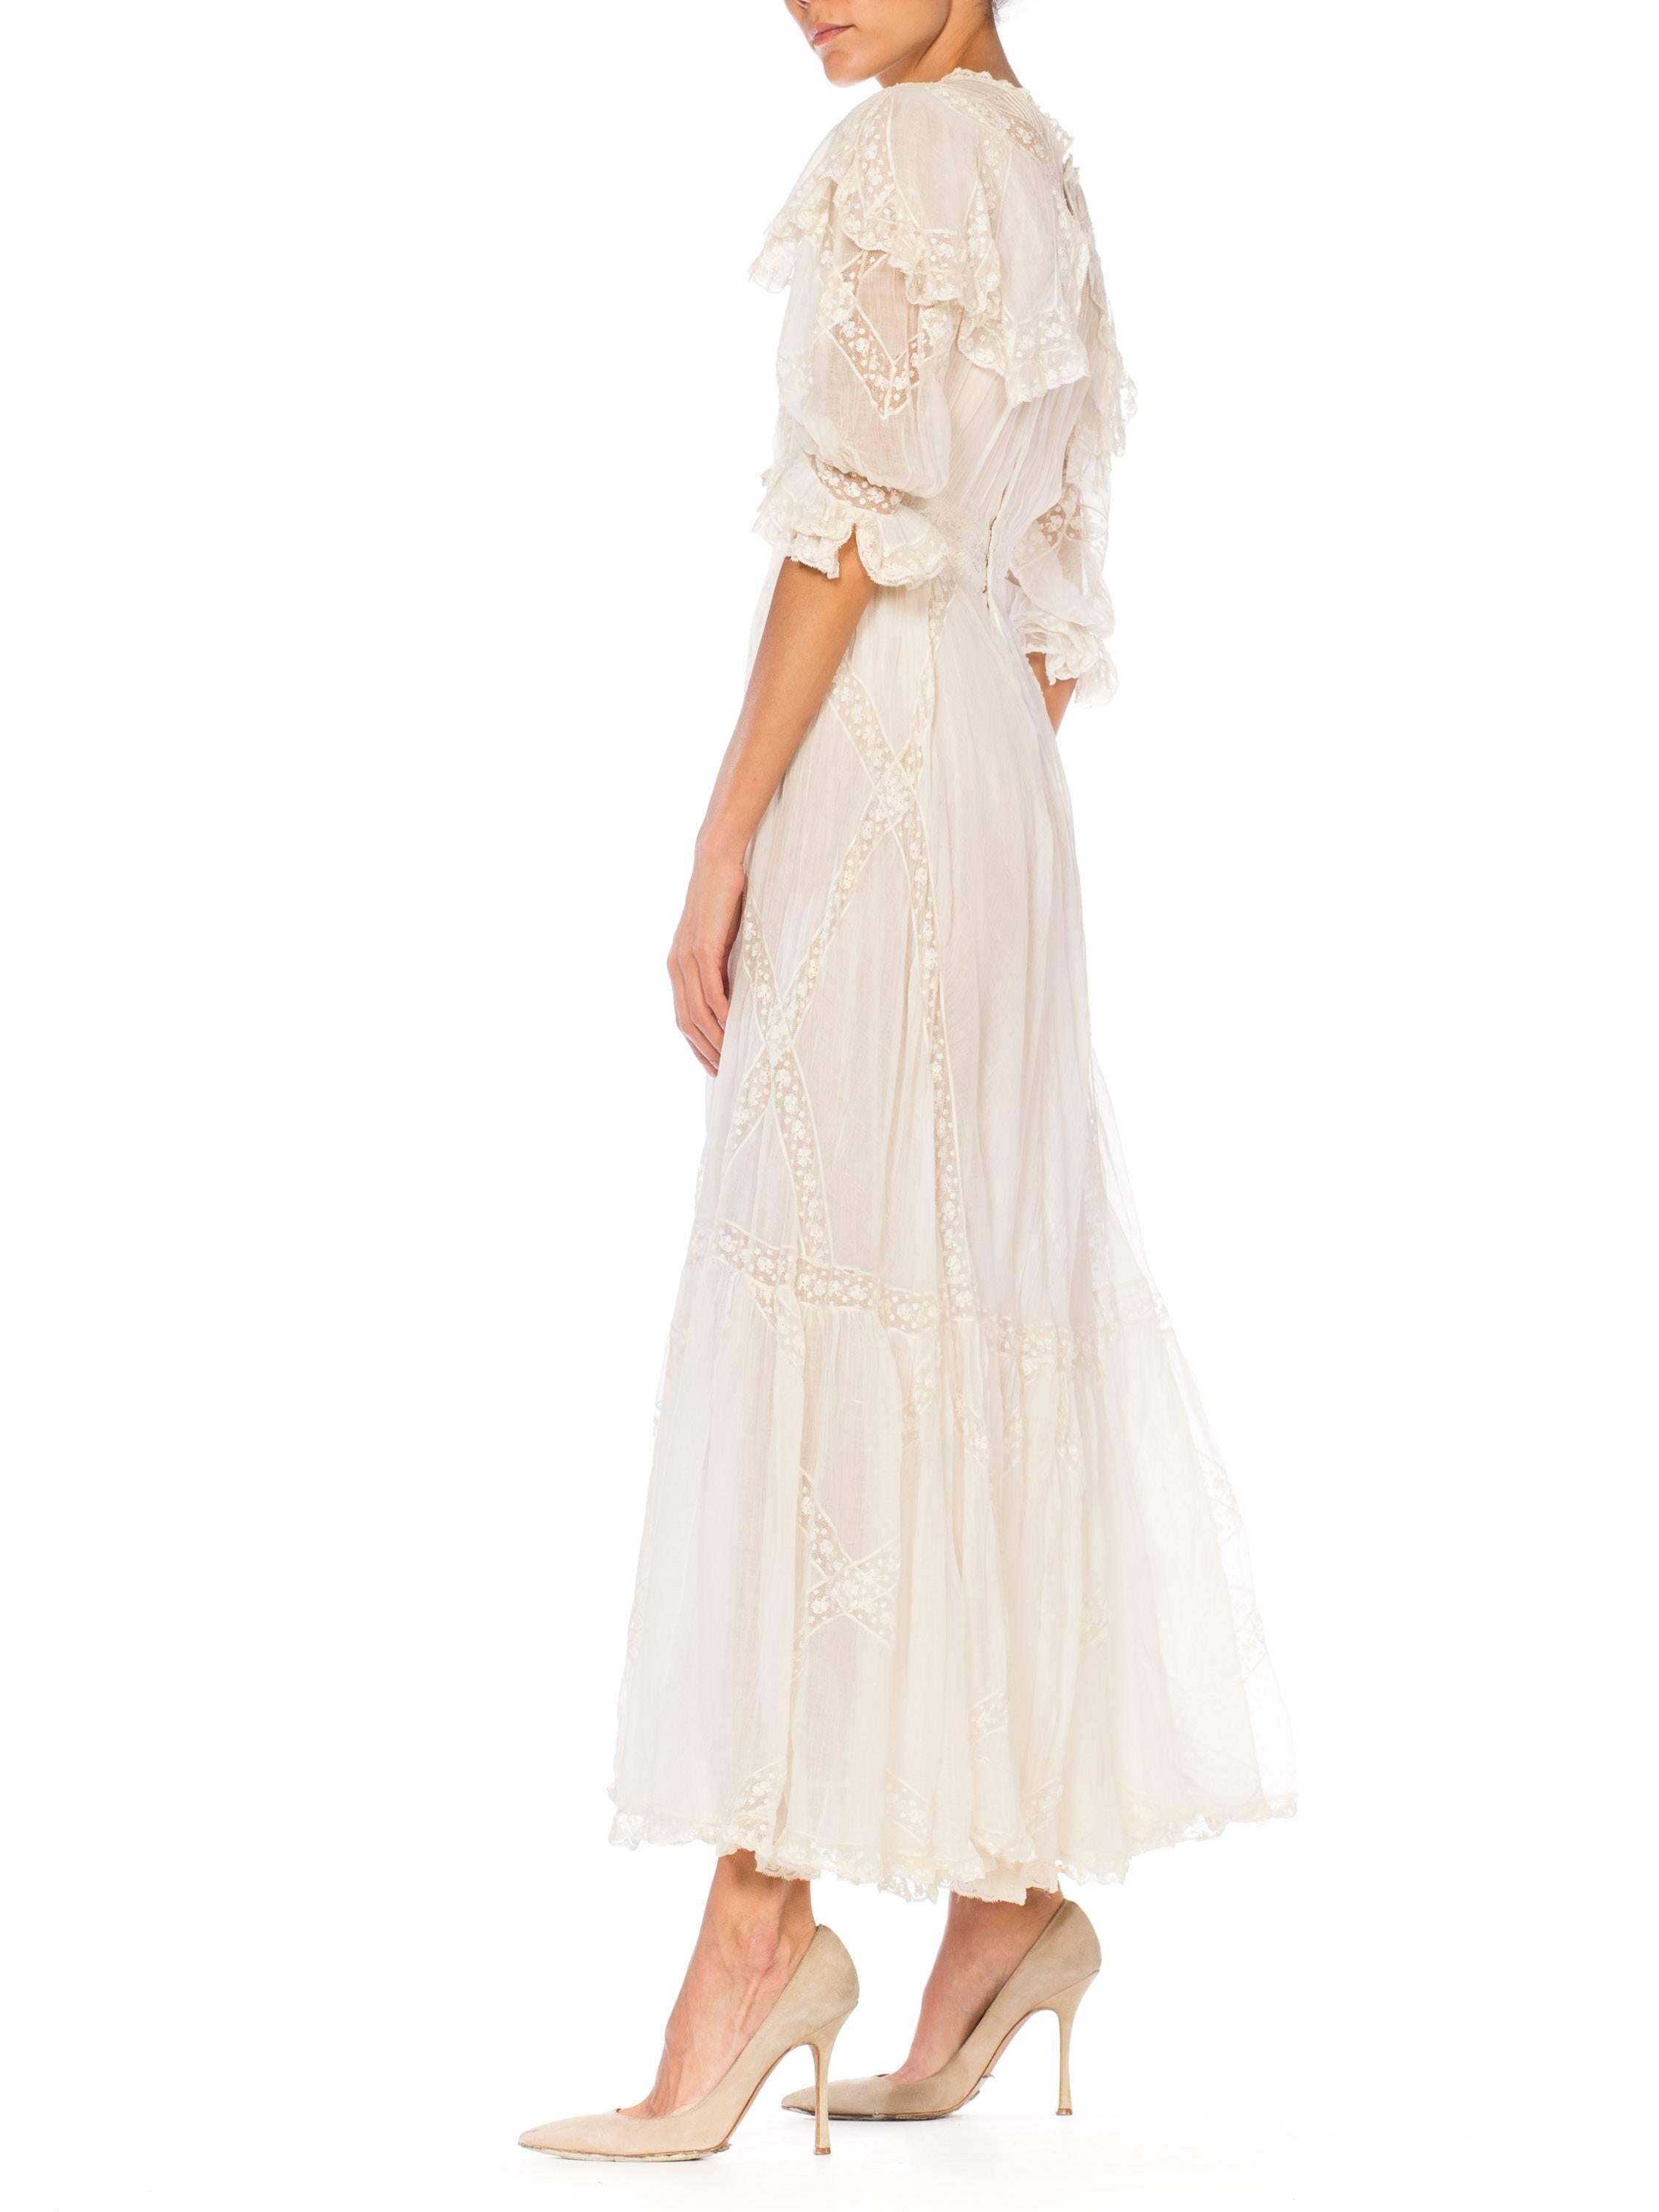 Belle Epoque Late Victorian Cotton and Lace Tea Dress 8